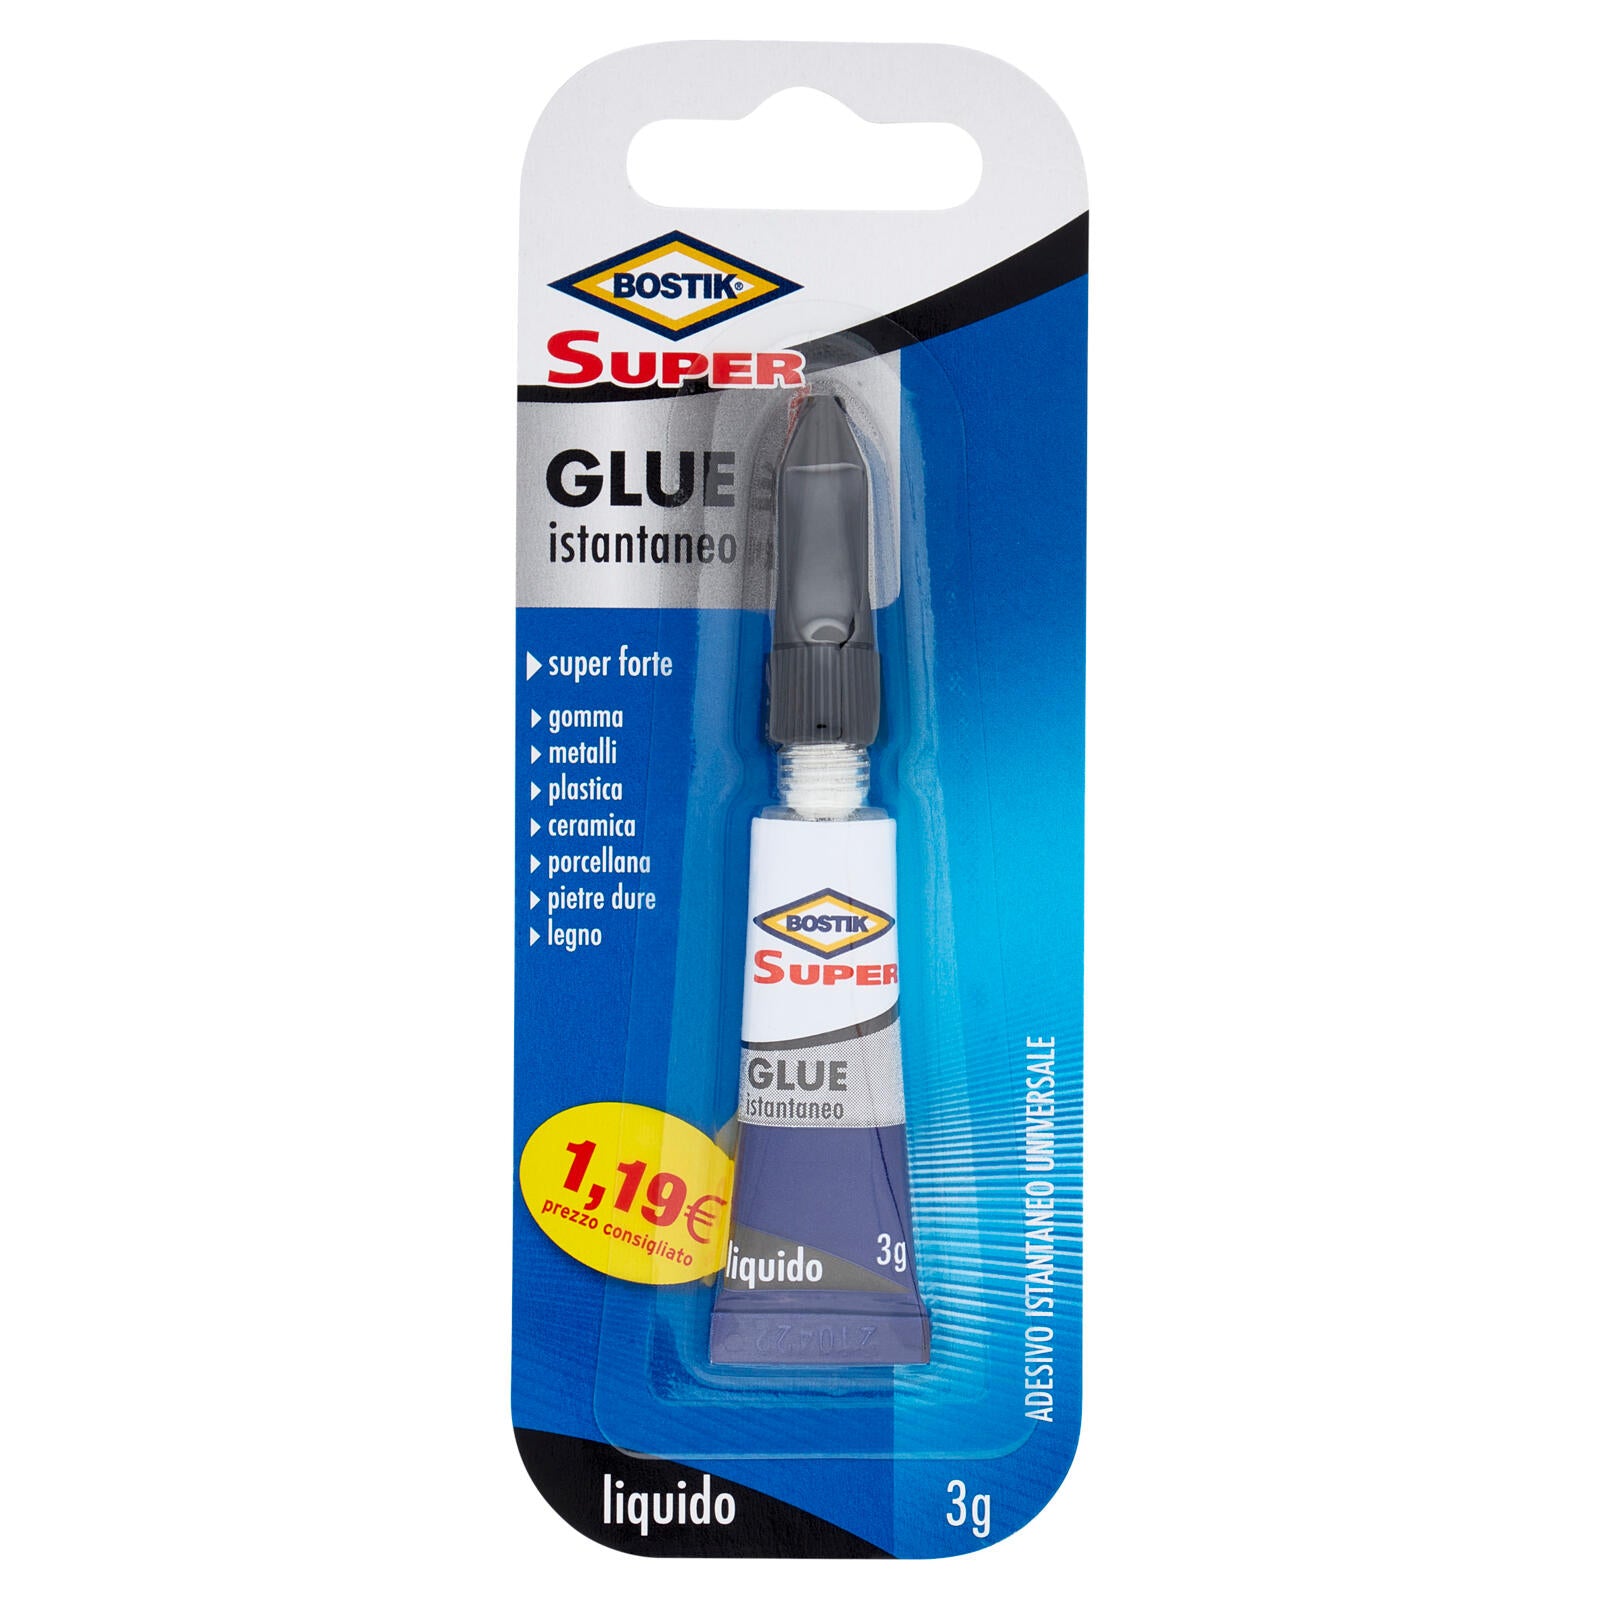 Bostik Super Glue istantaneo 3 g ->